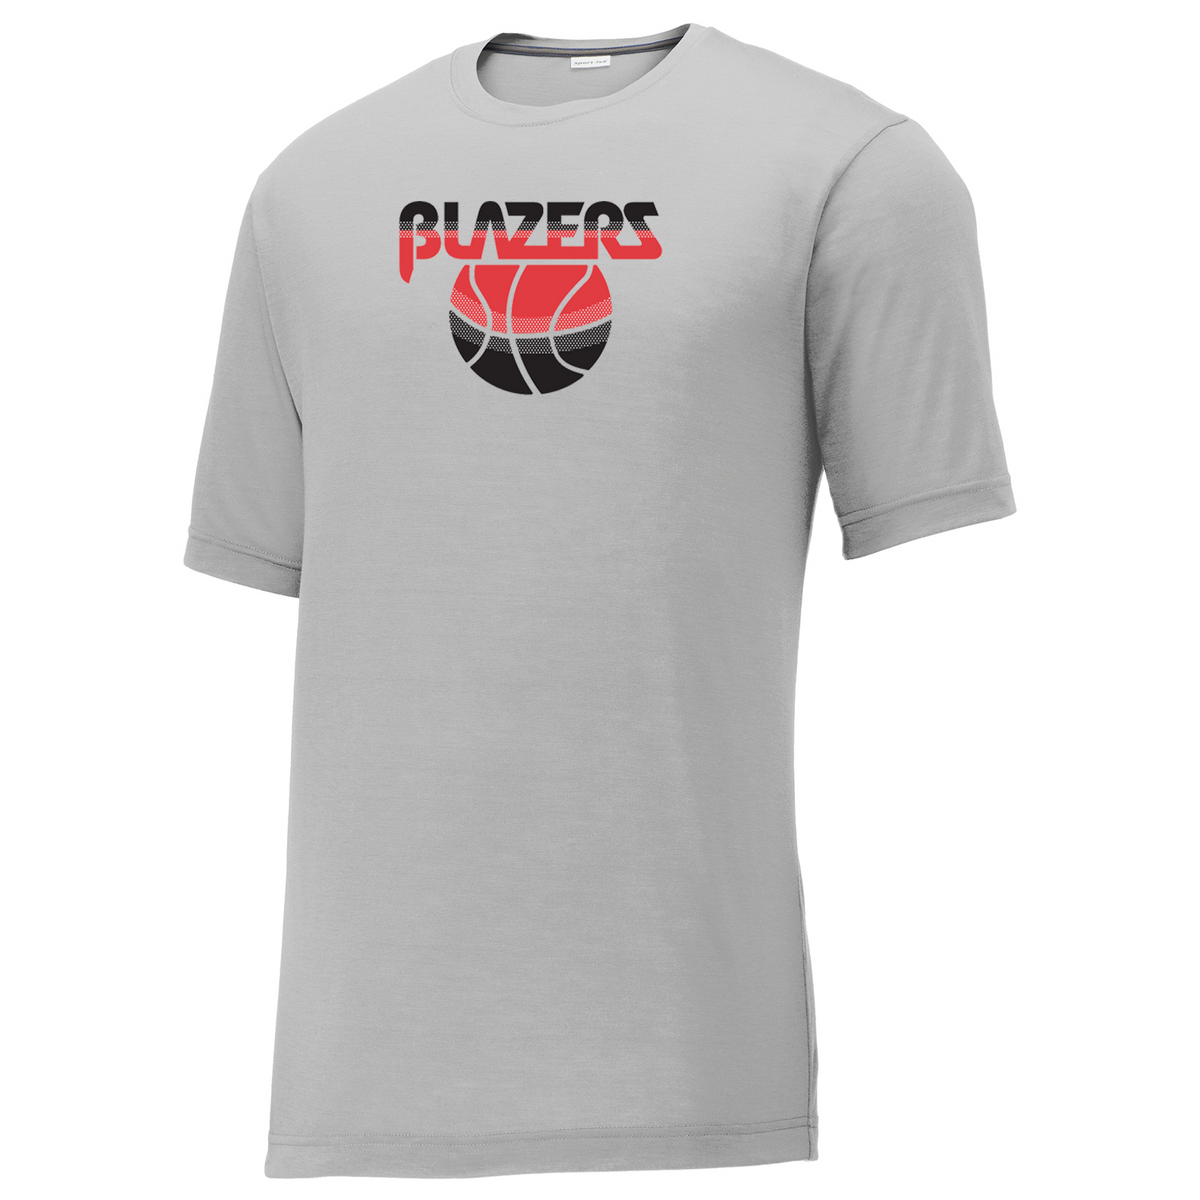 Blazers Basketball CottonTouch Performance T-Shirt